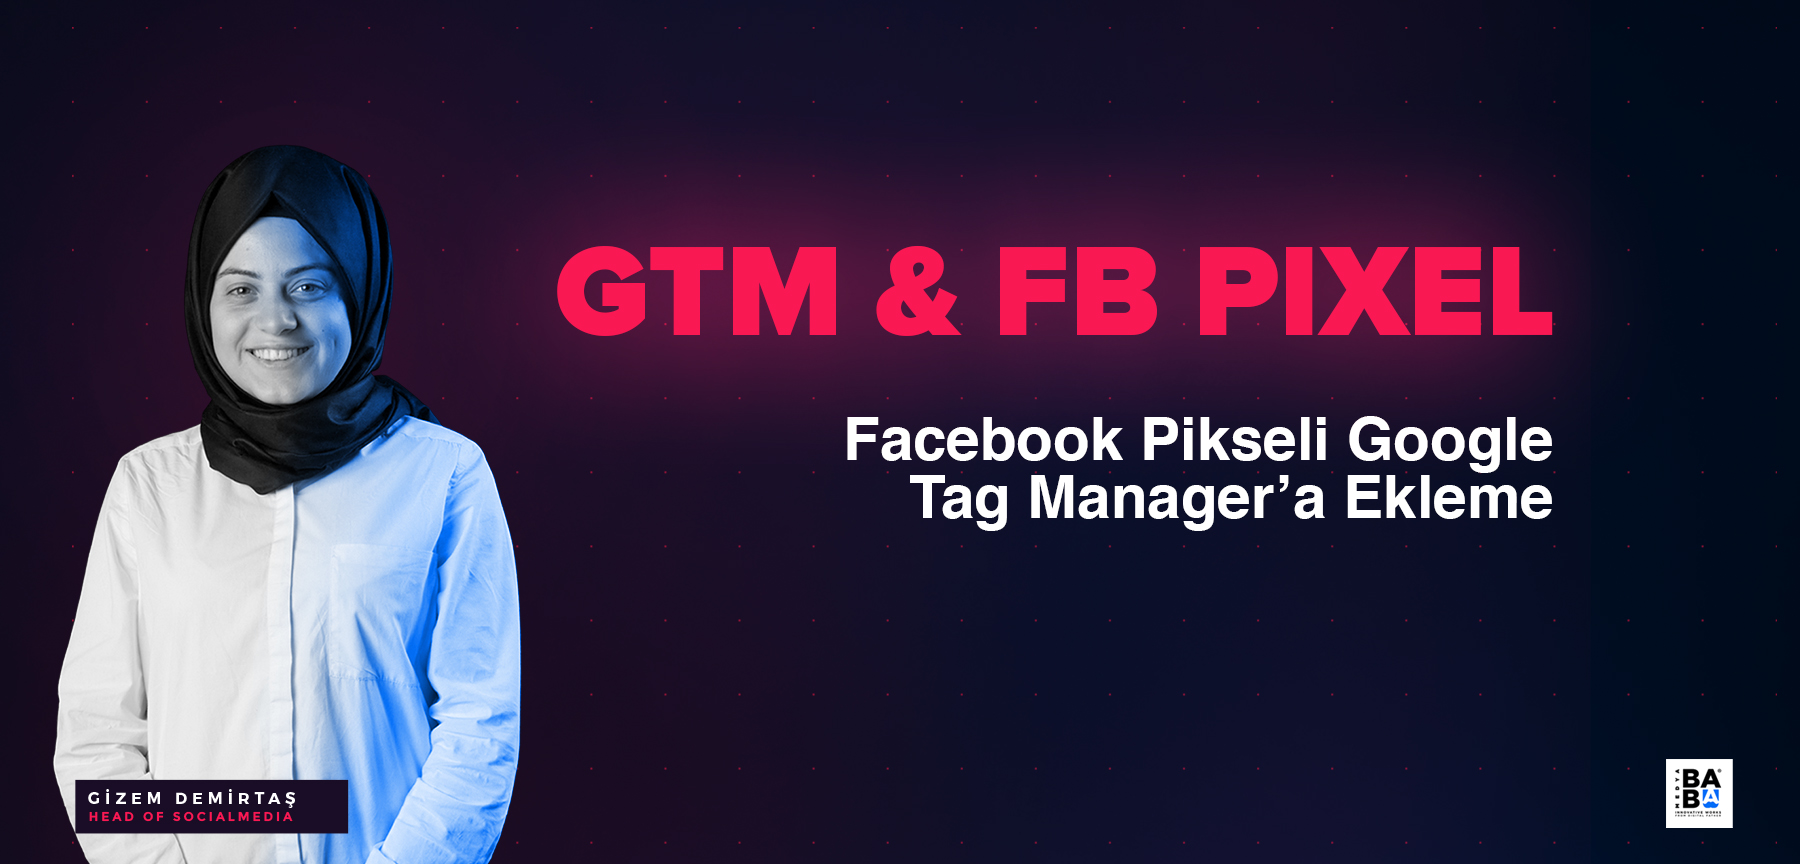 Facebook Pikseli Google Tag Manager'a Nasıl Eklenir?